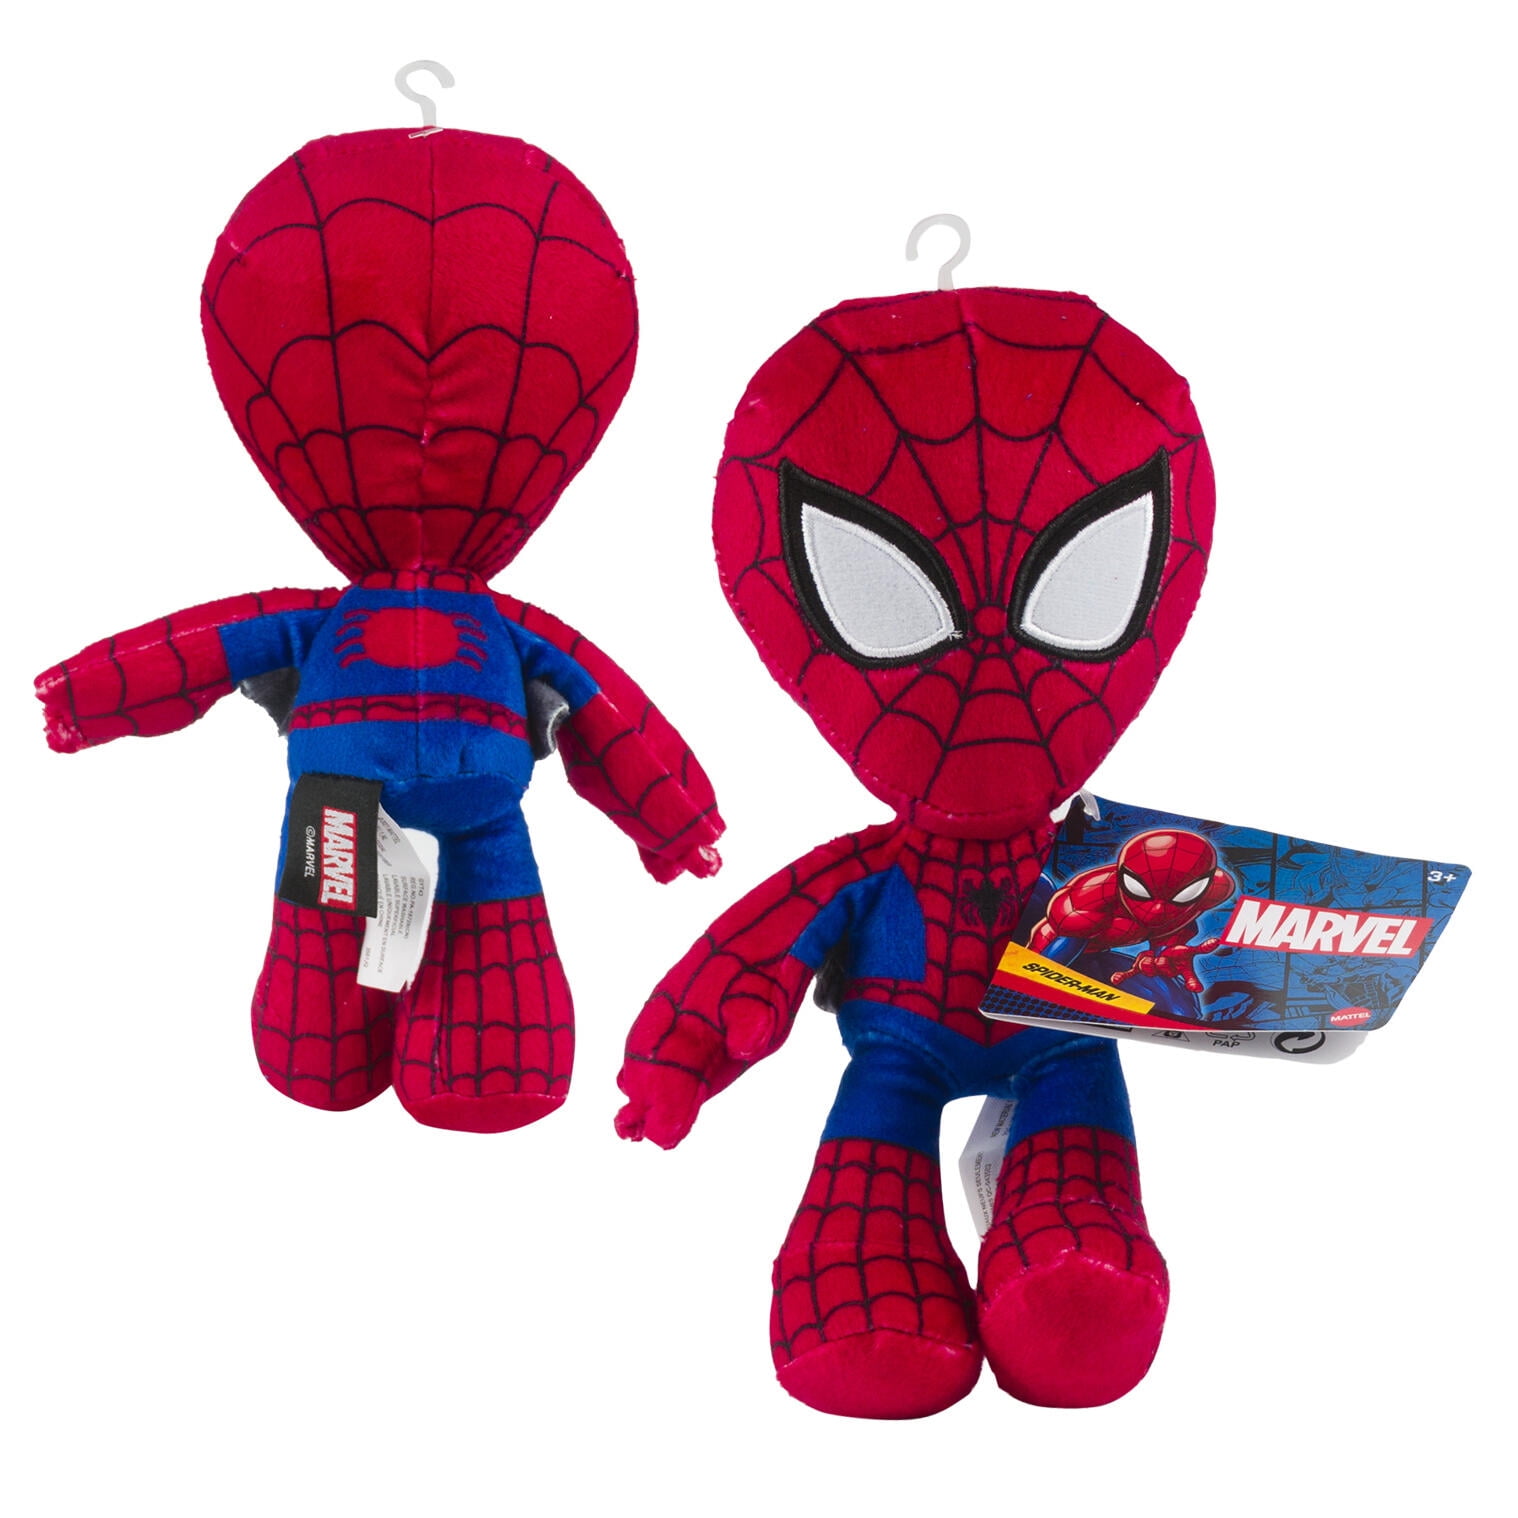 Marvel Spider-Man: Simply Colouring – Plush World